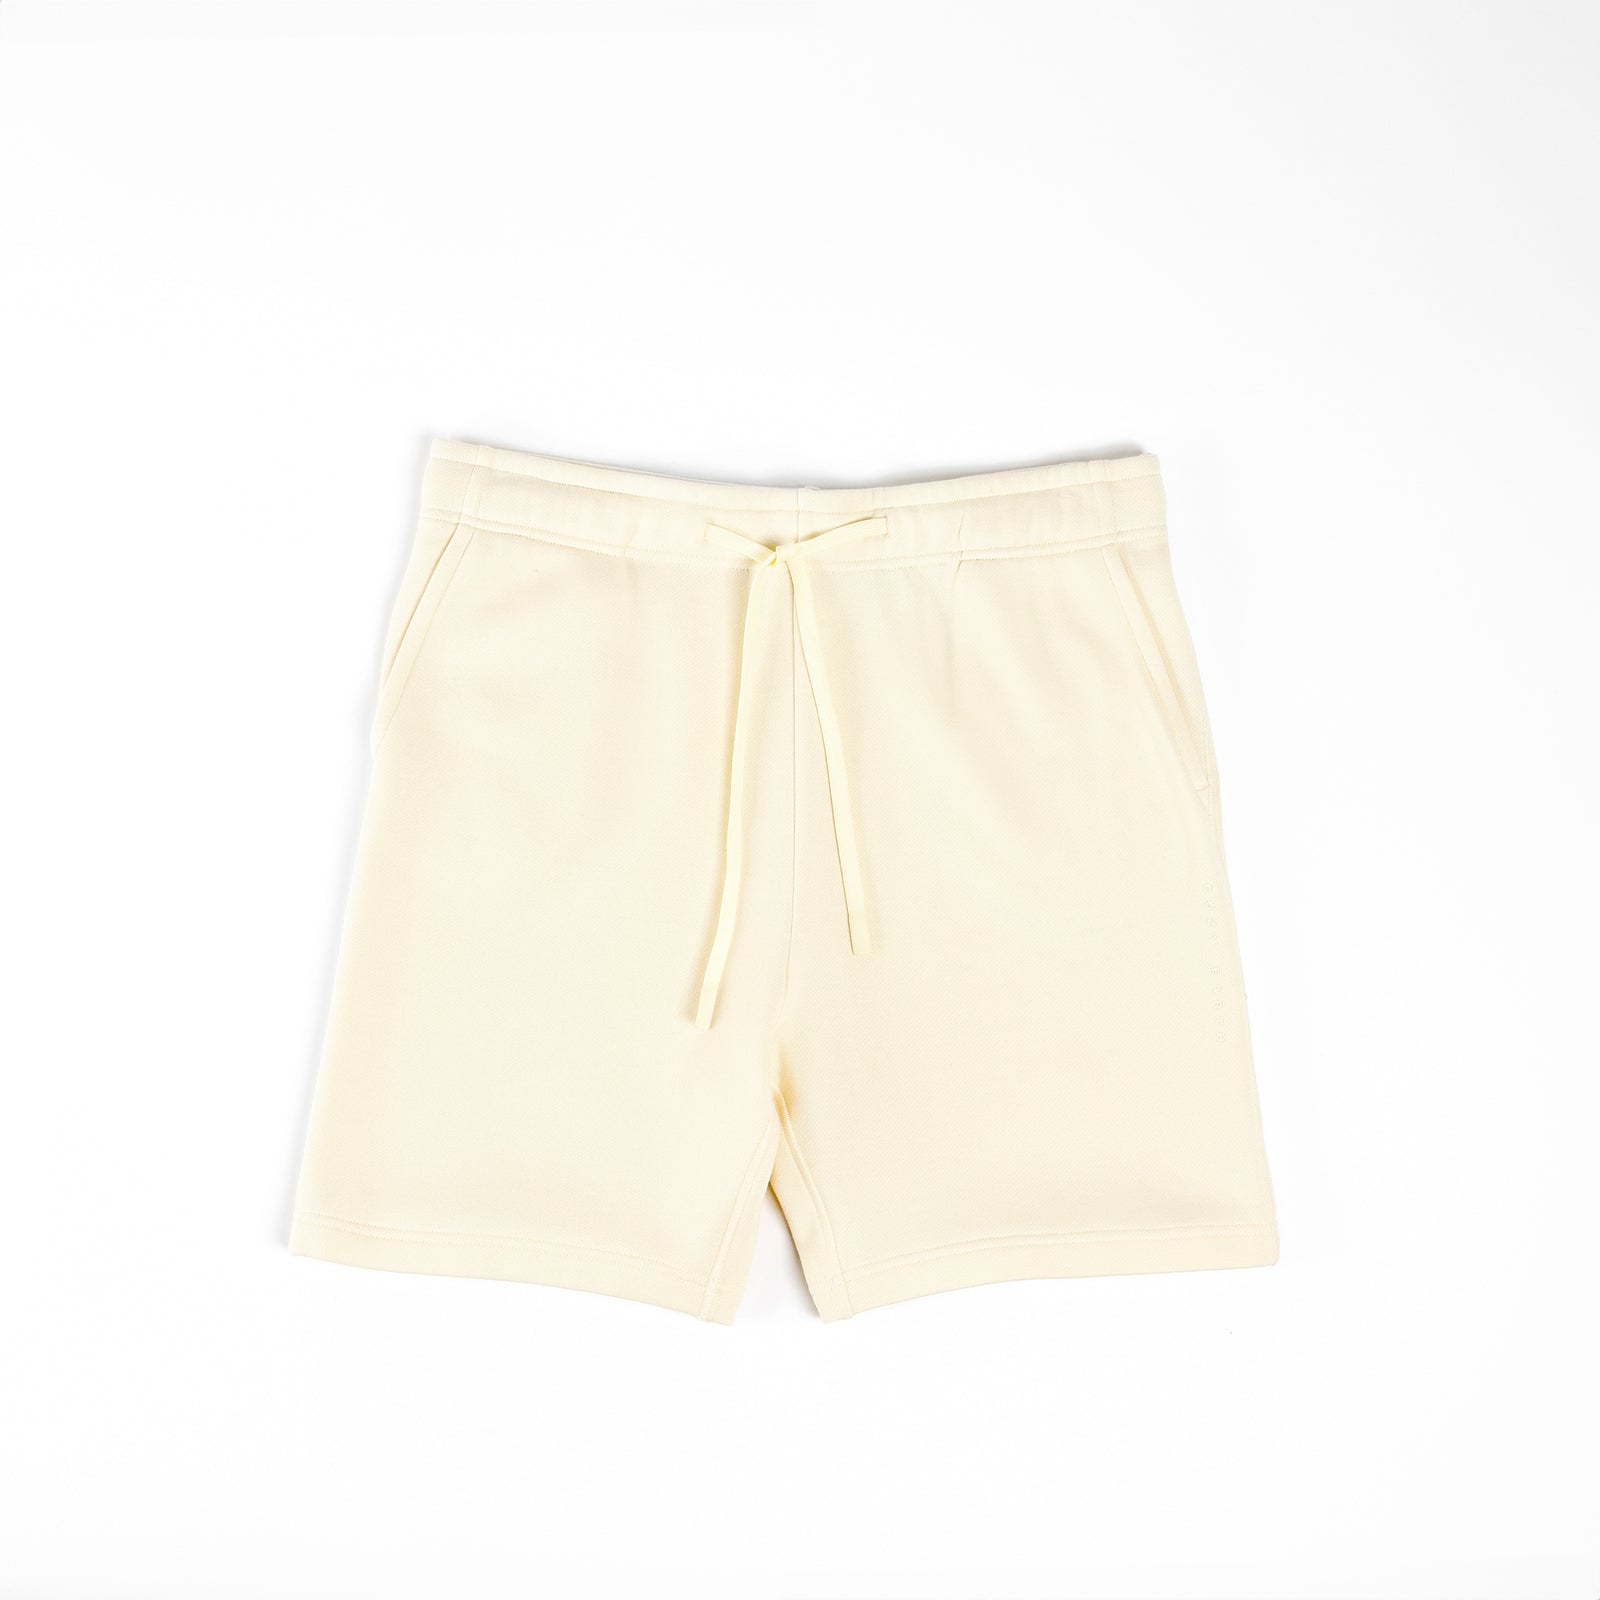 Alabaster CityScape Shorts with white background 